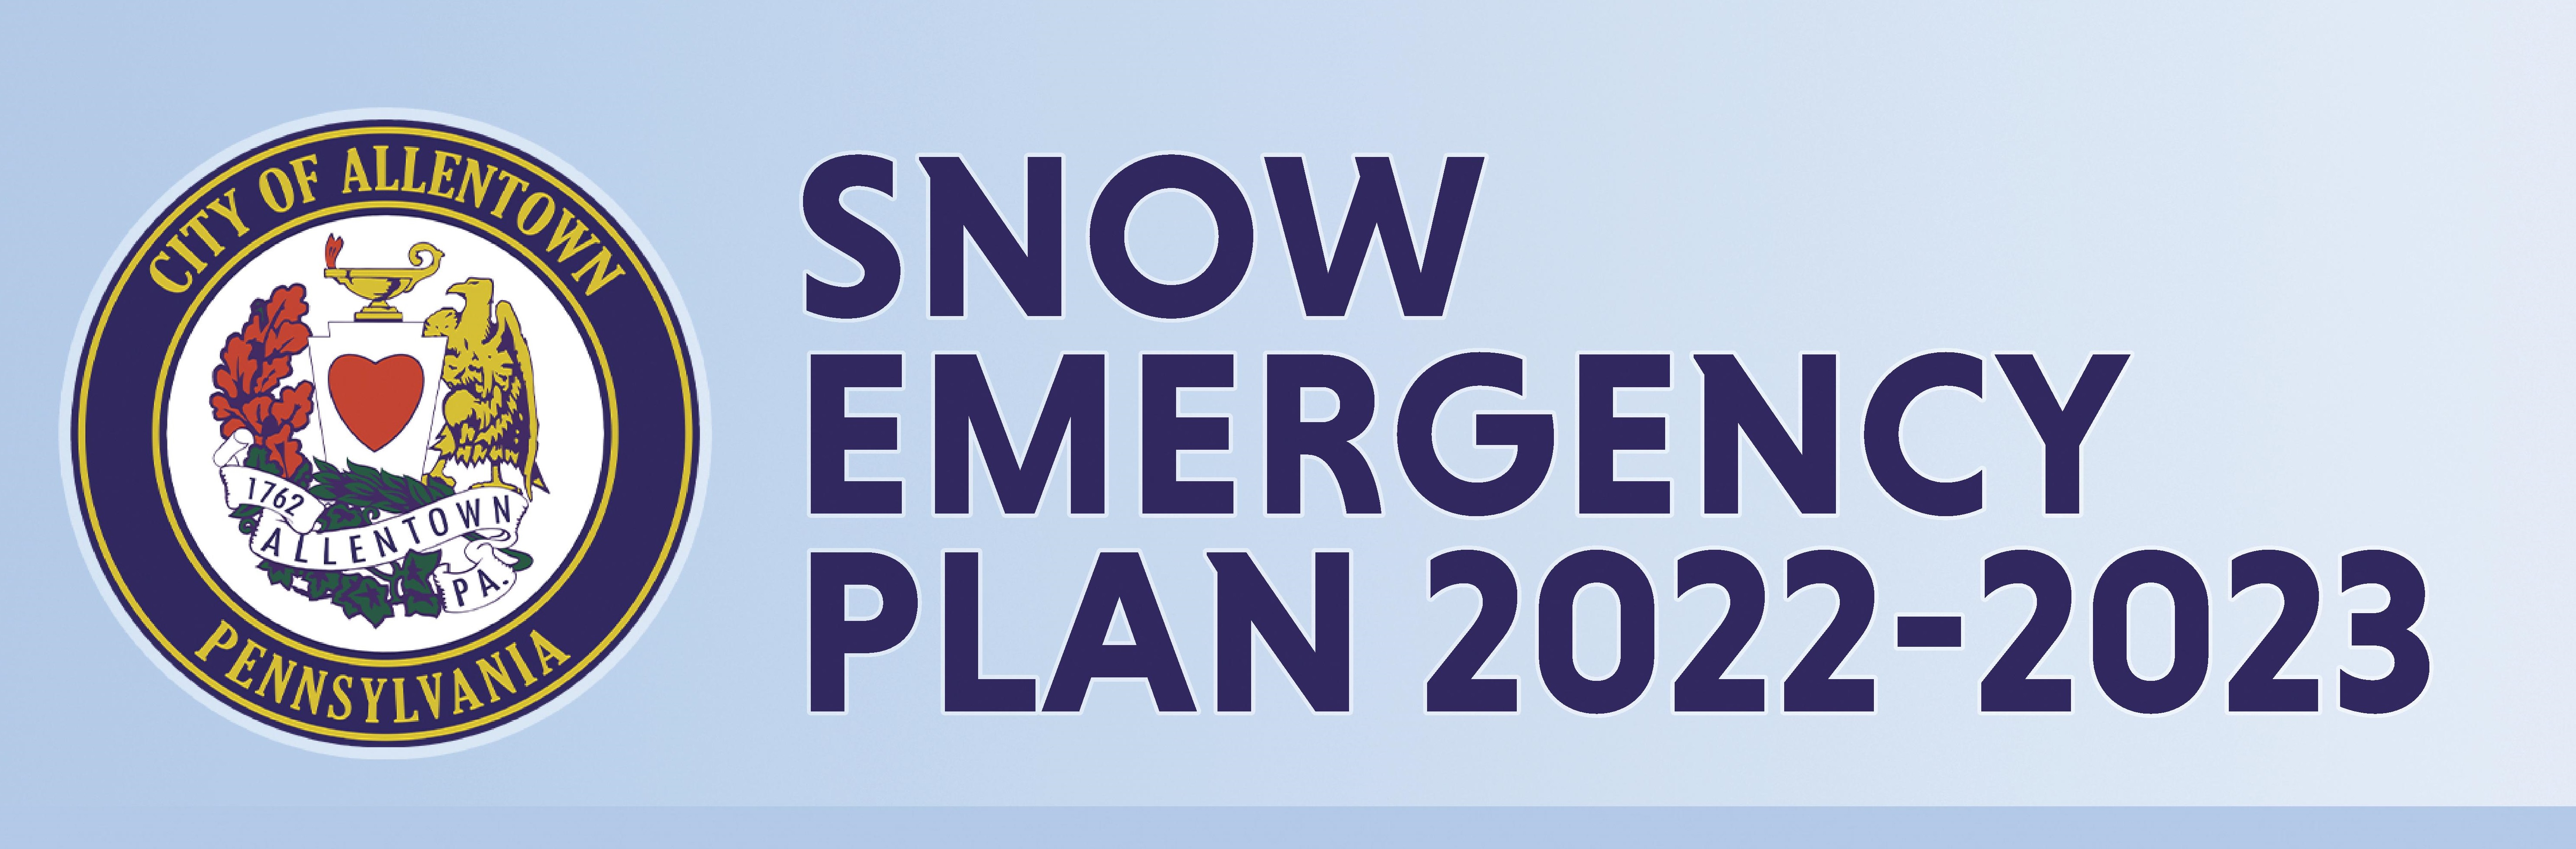 Snow Emergency Plan Cover